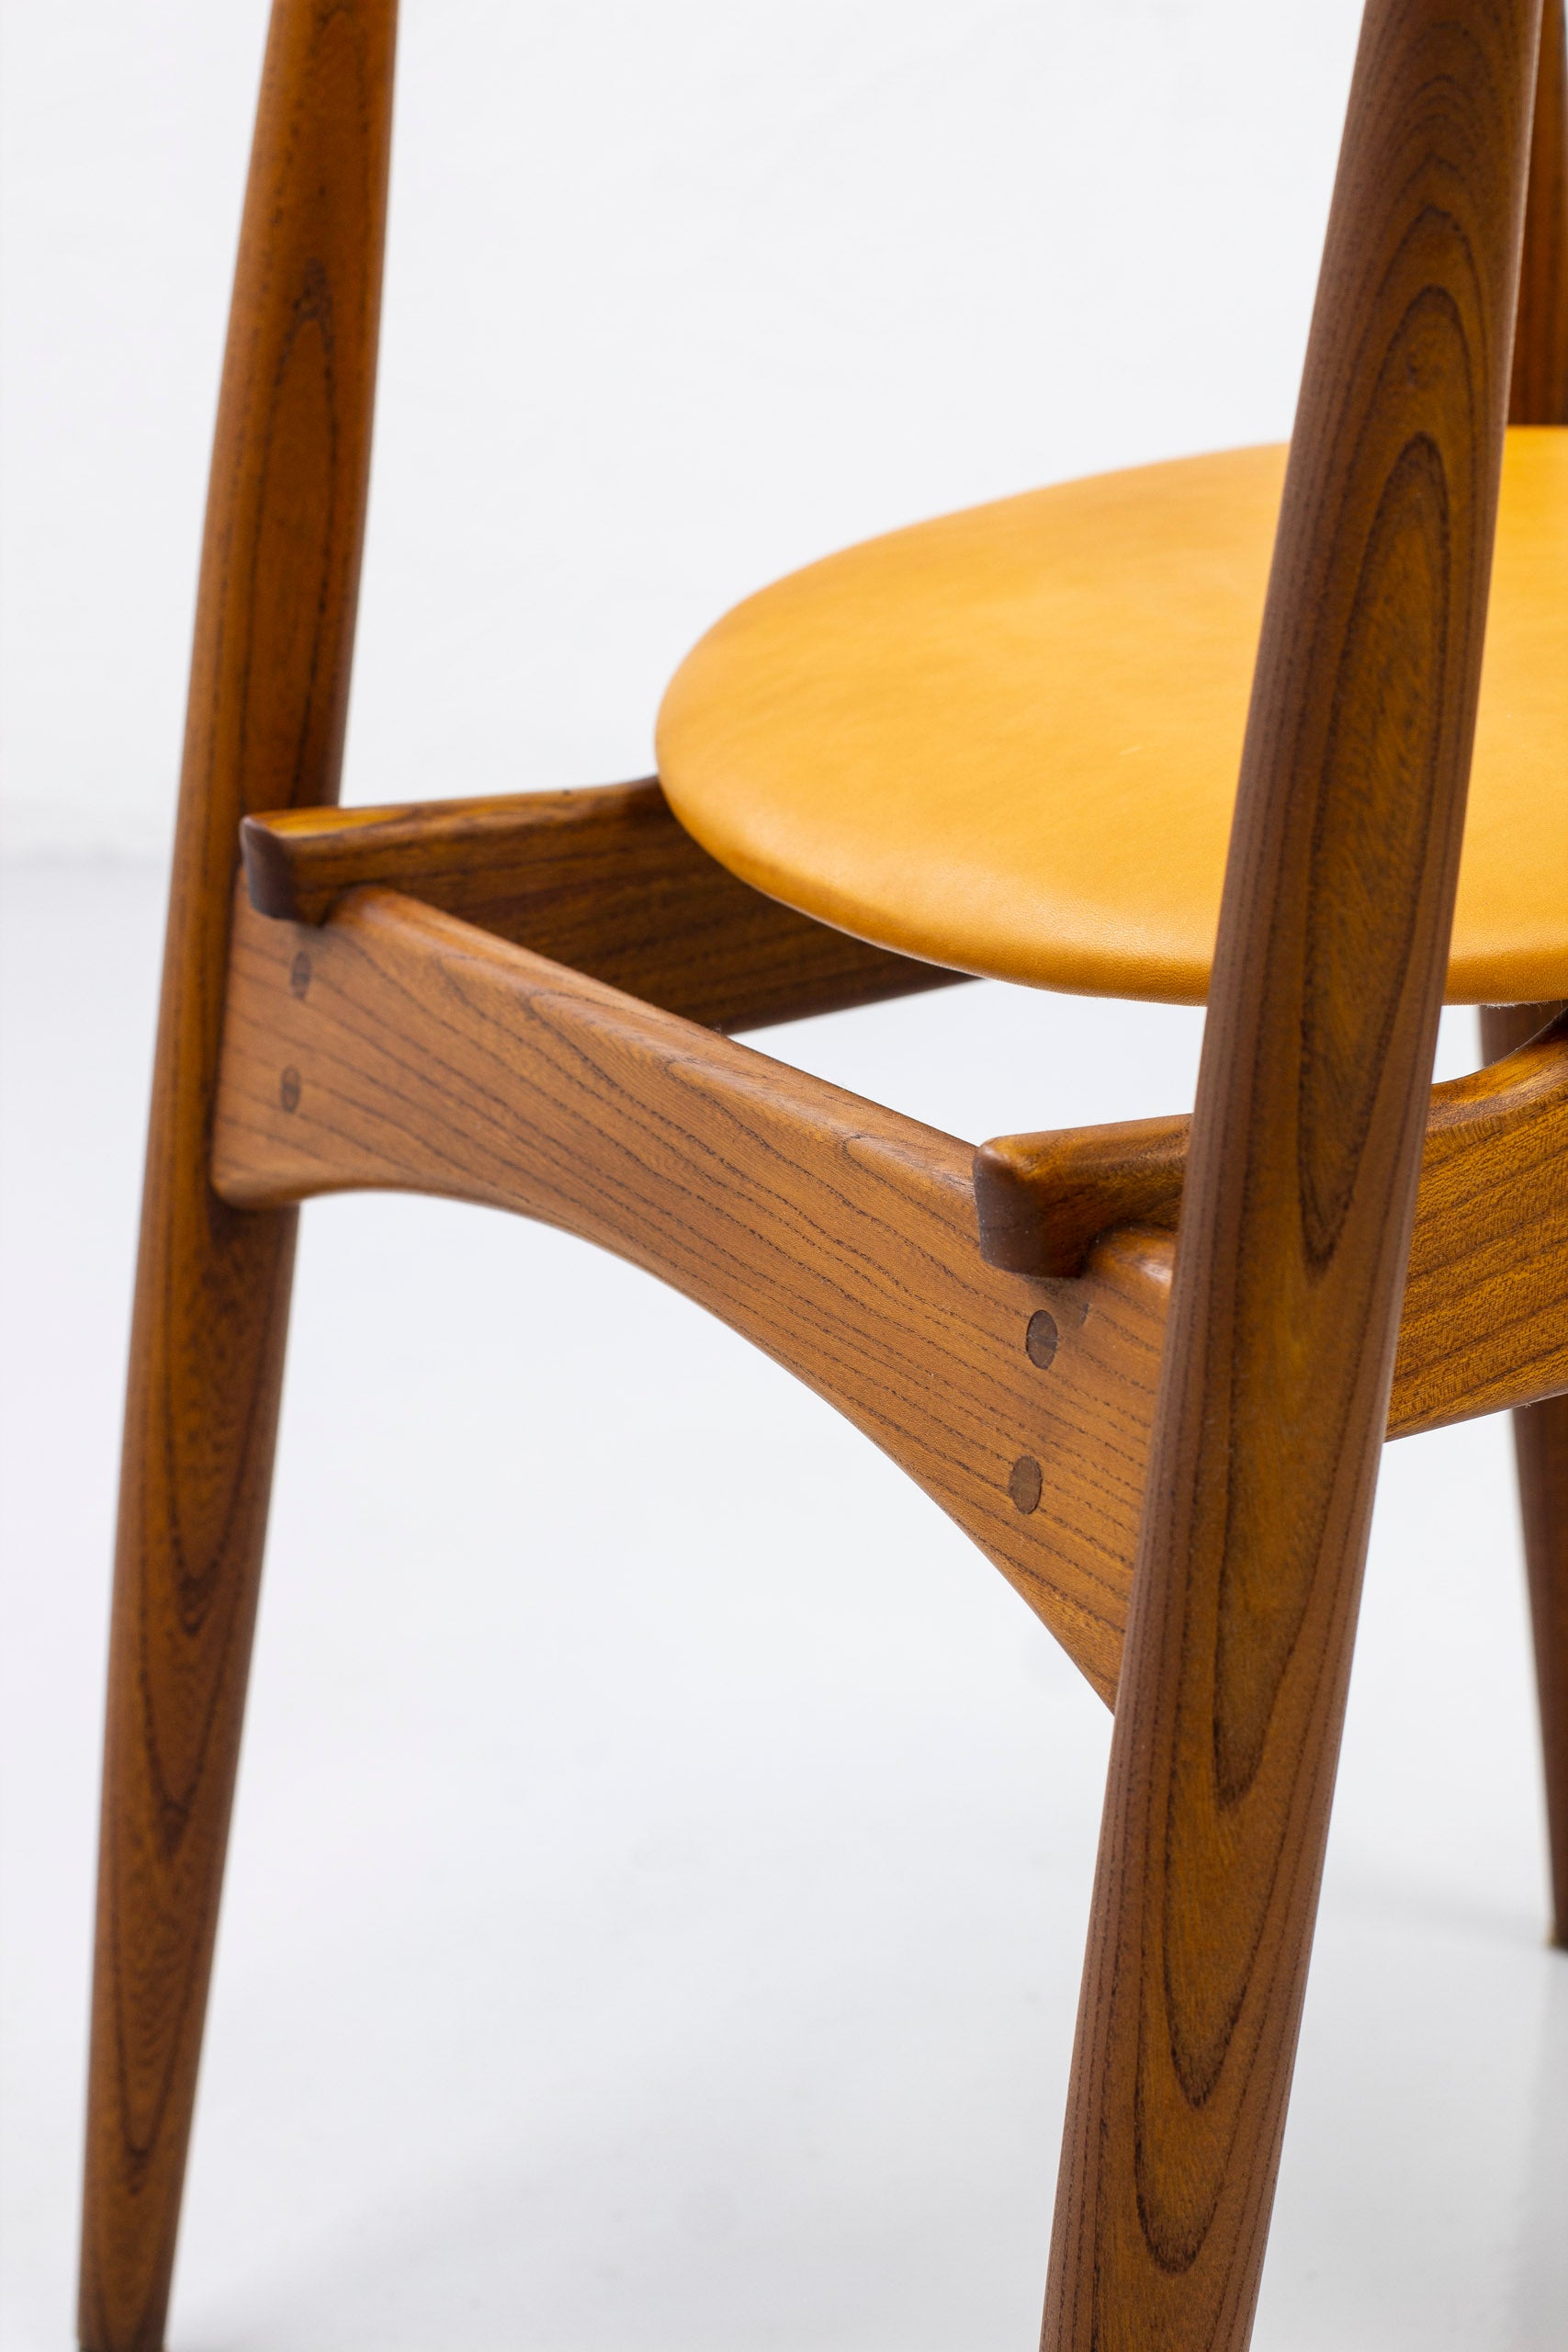 Arm chair by Arne Wahl Iversen